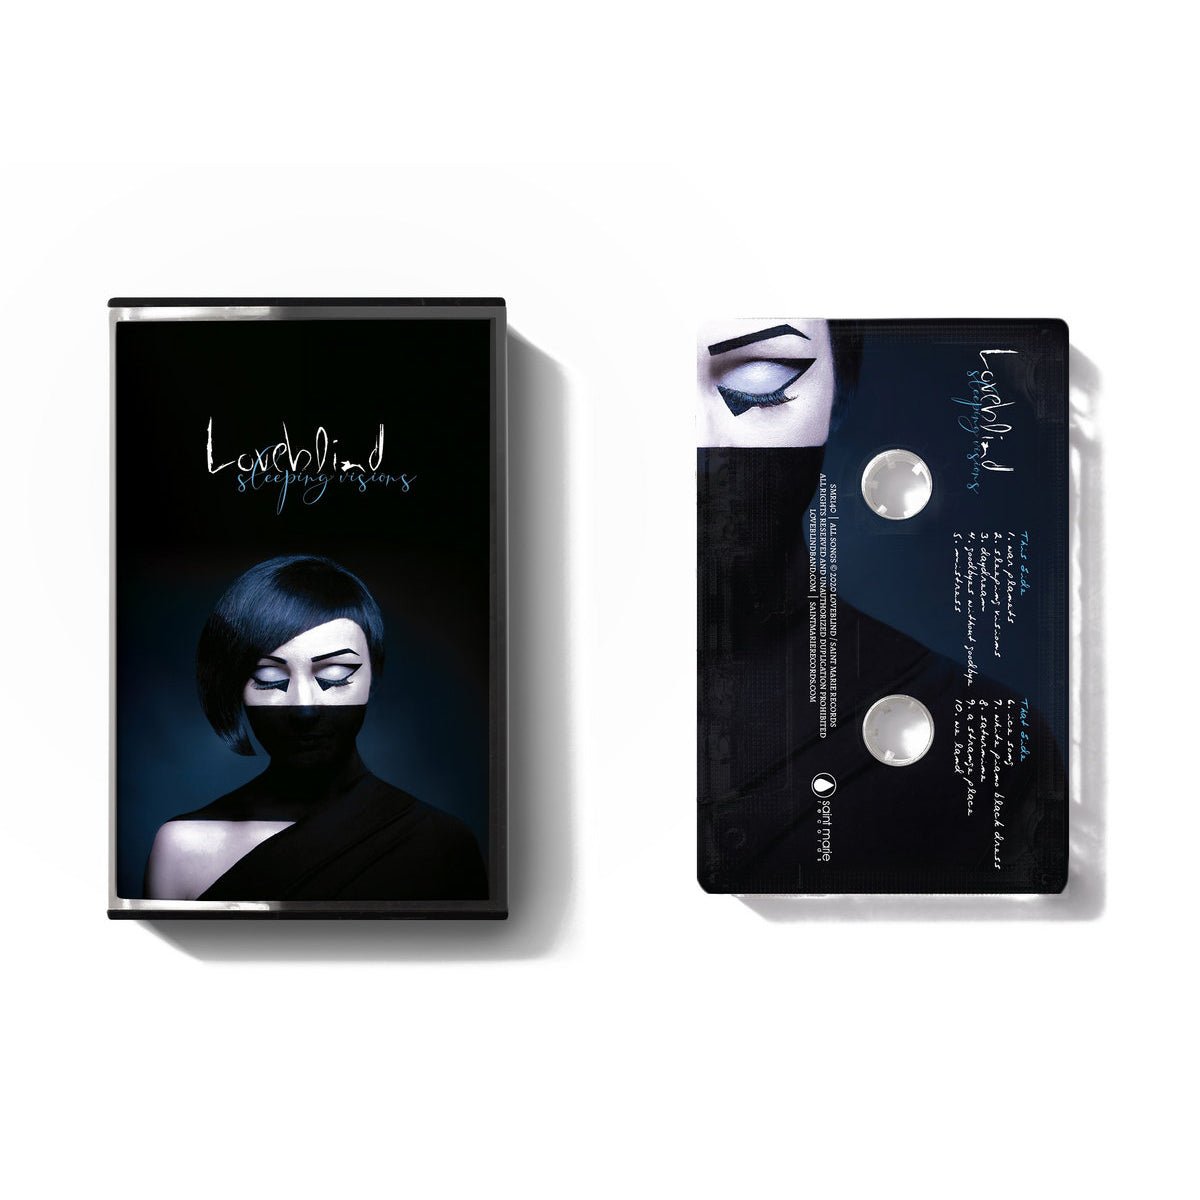 We are Loveblind - Sleeping Visions Music Cassette Tapes Vinyl